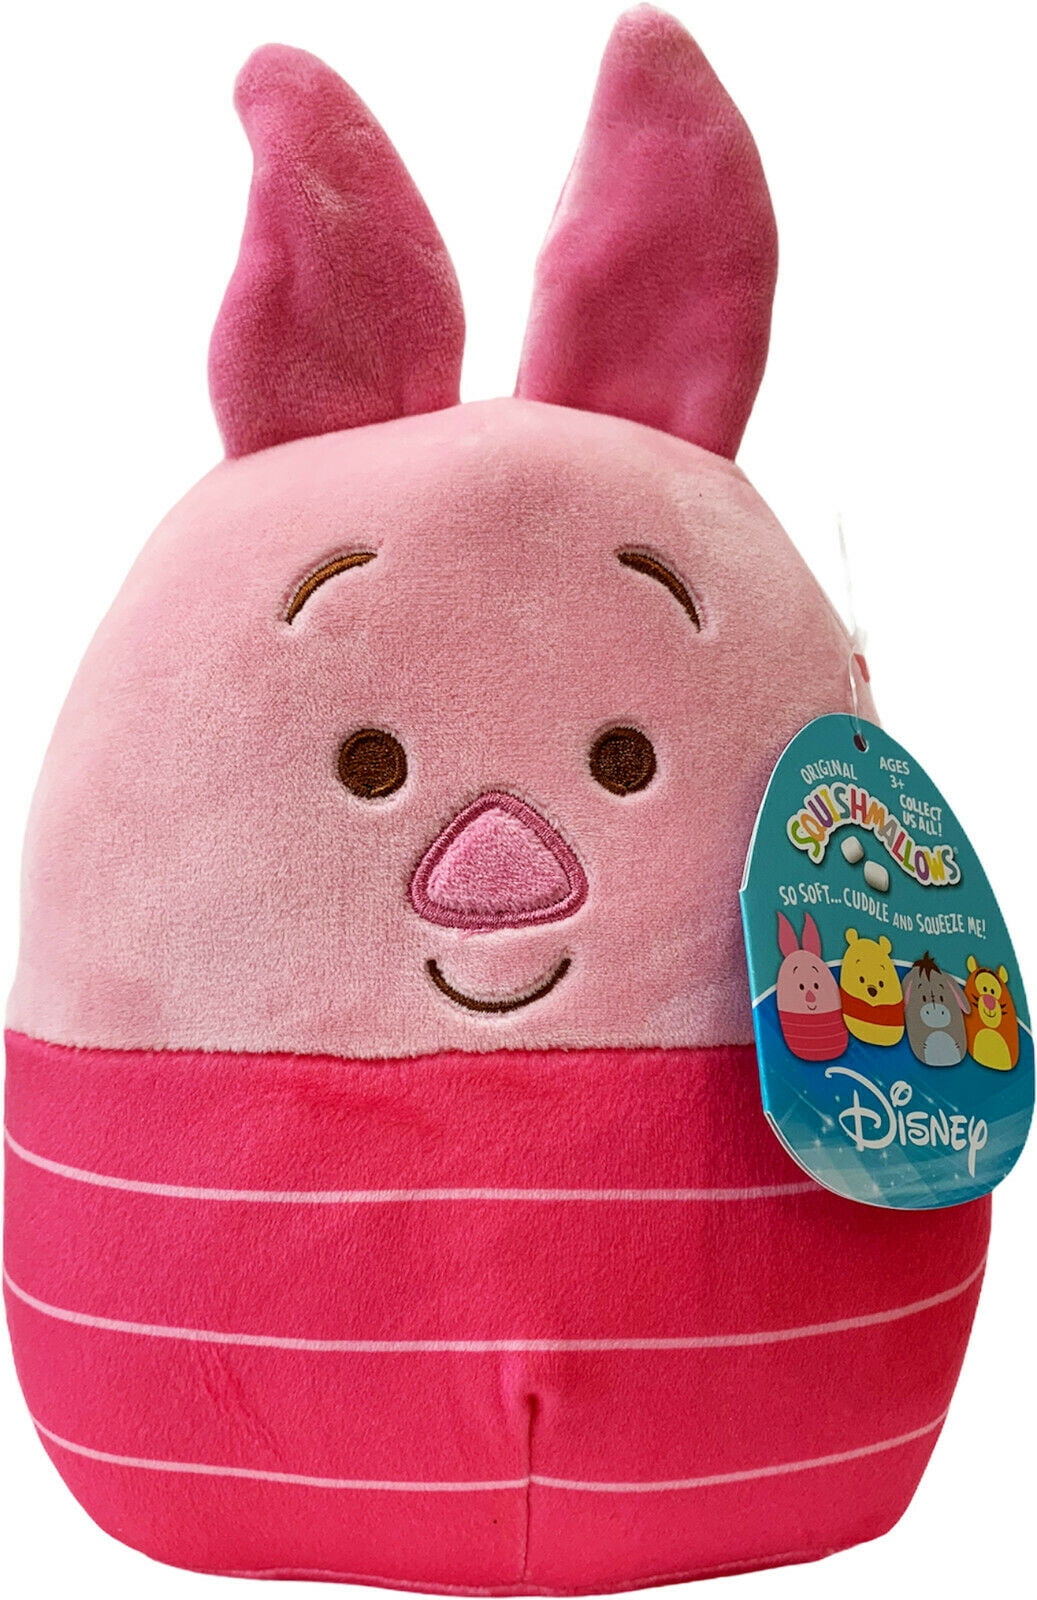 New Disney Winnie the Pooh Piglet Soft Stuffed Animal plush Toy Doll 6" Gift 